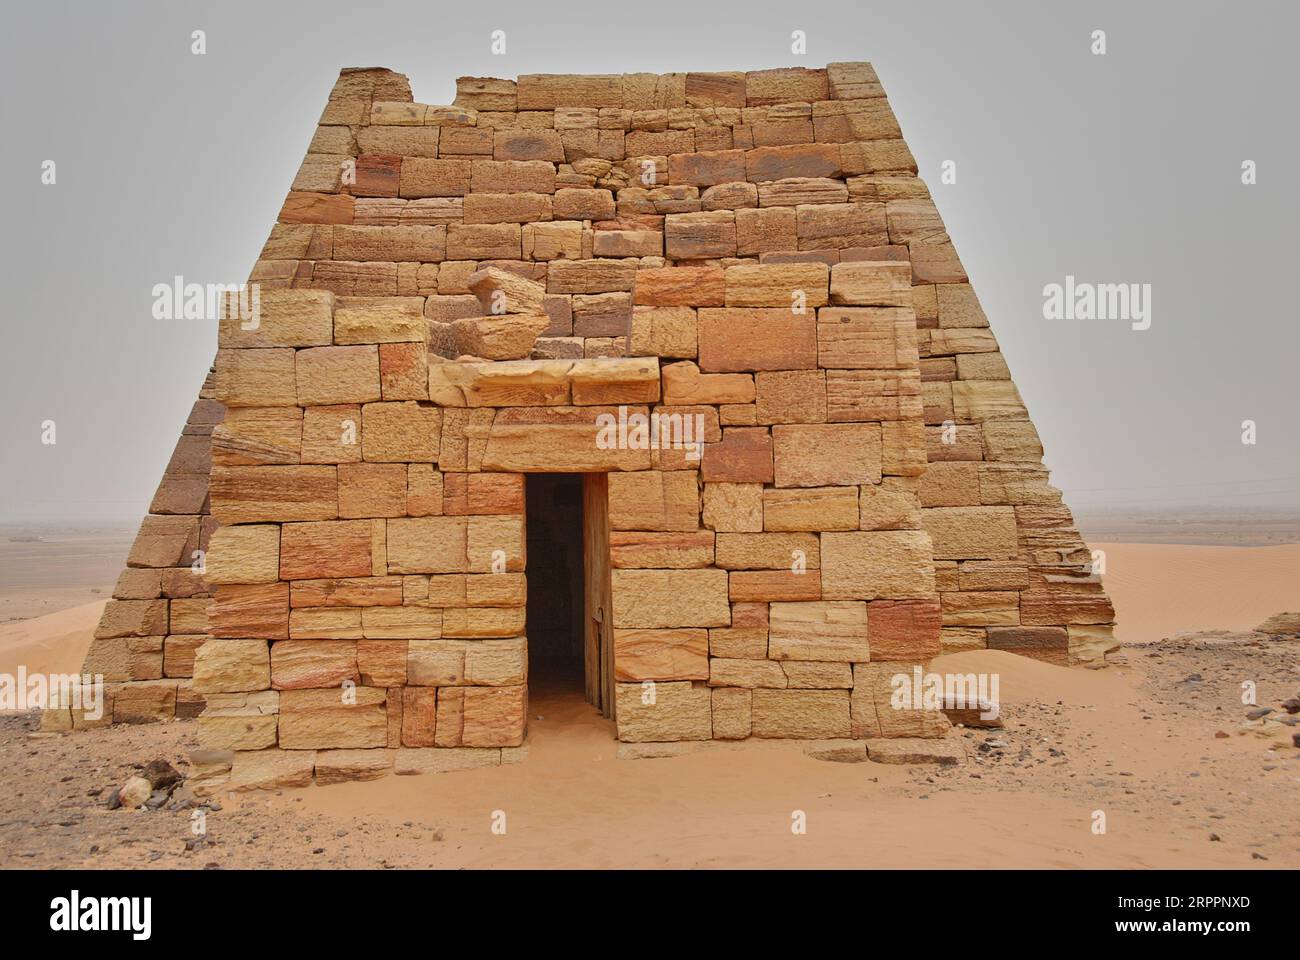 Meroe, Sudan - 05 29 2011: ancient historic archeological site of Meroe Pyramids in the dry and arid desert region of the Sahara in Sudan along the ri Stock Photo